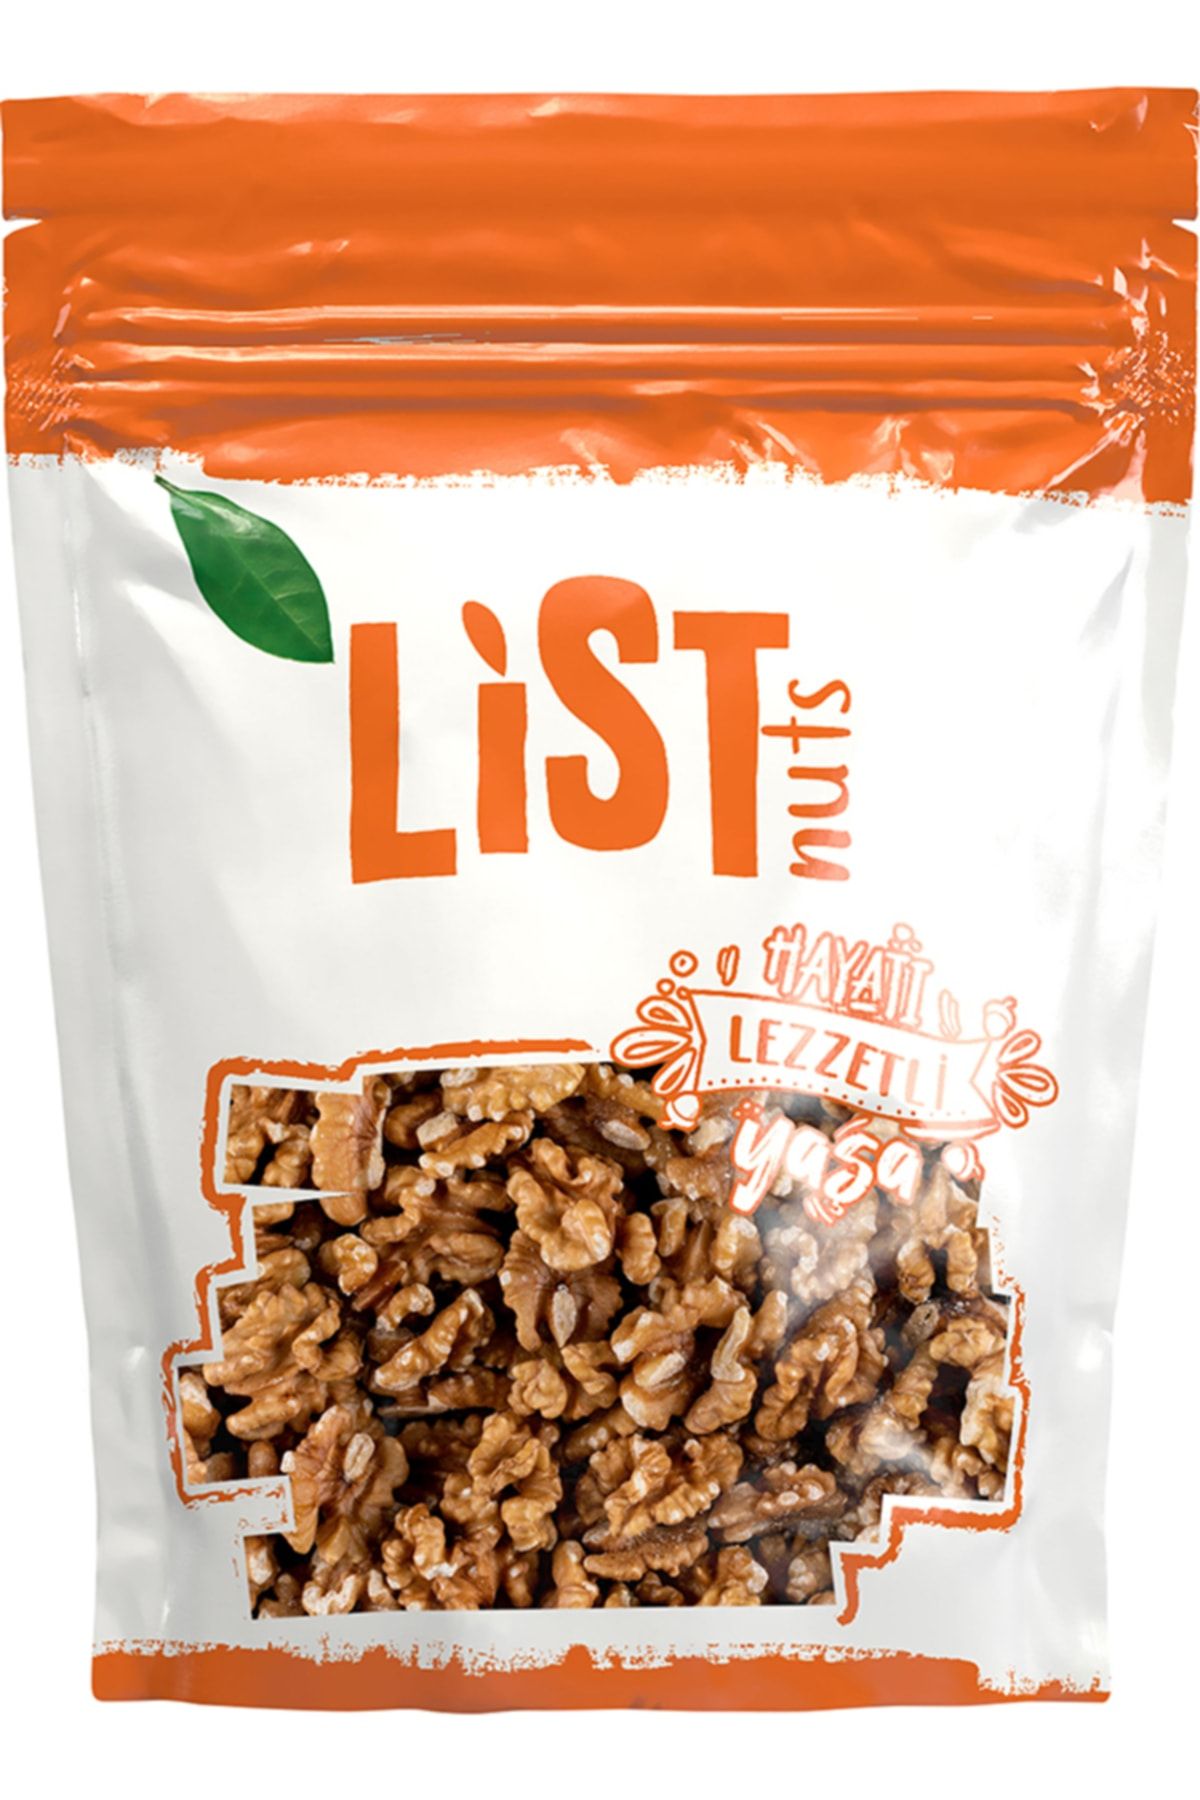 List Nuts Ceviz Içi 500 g